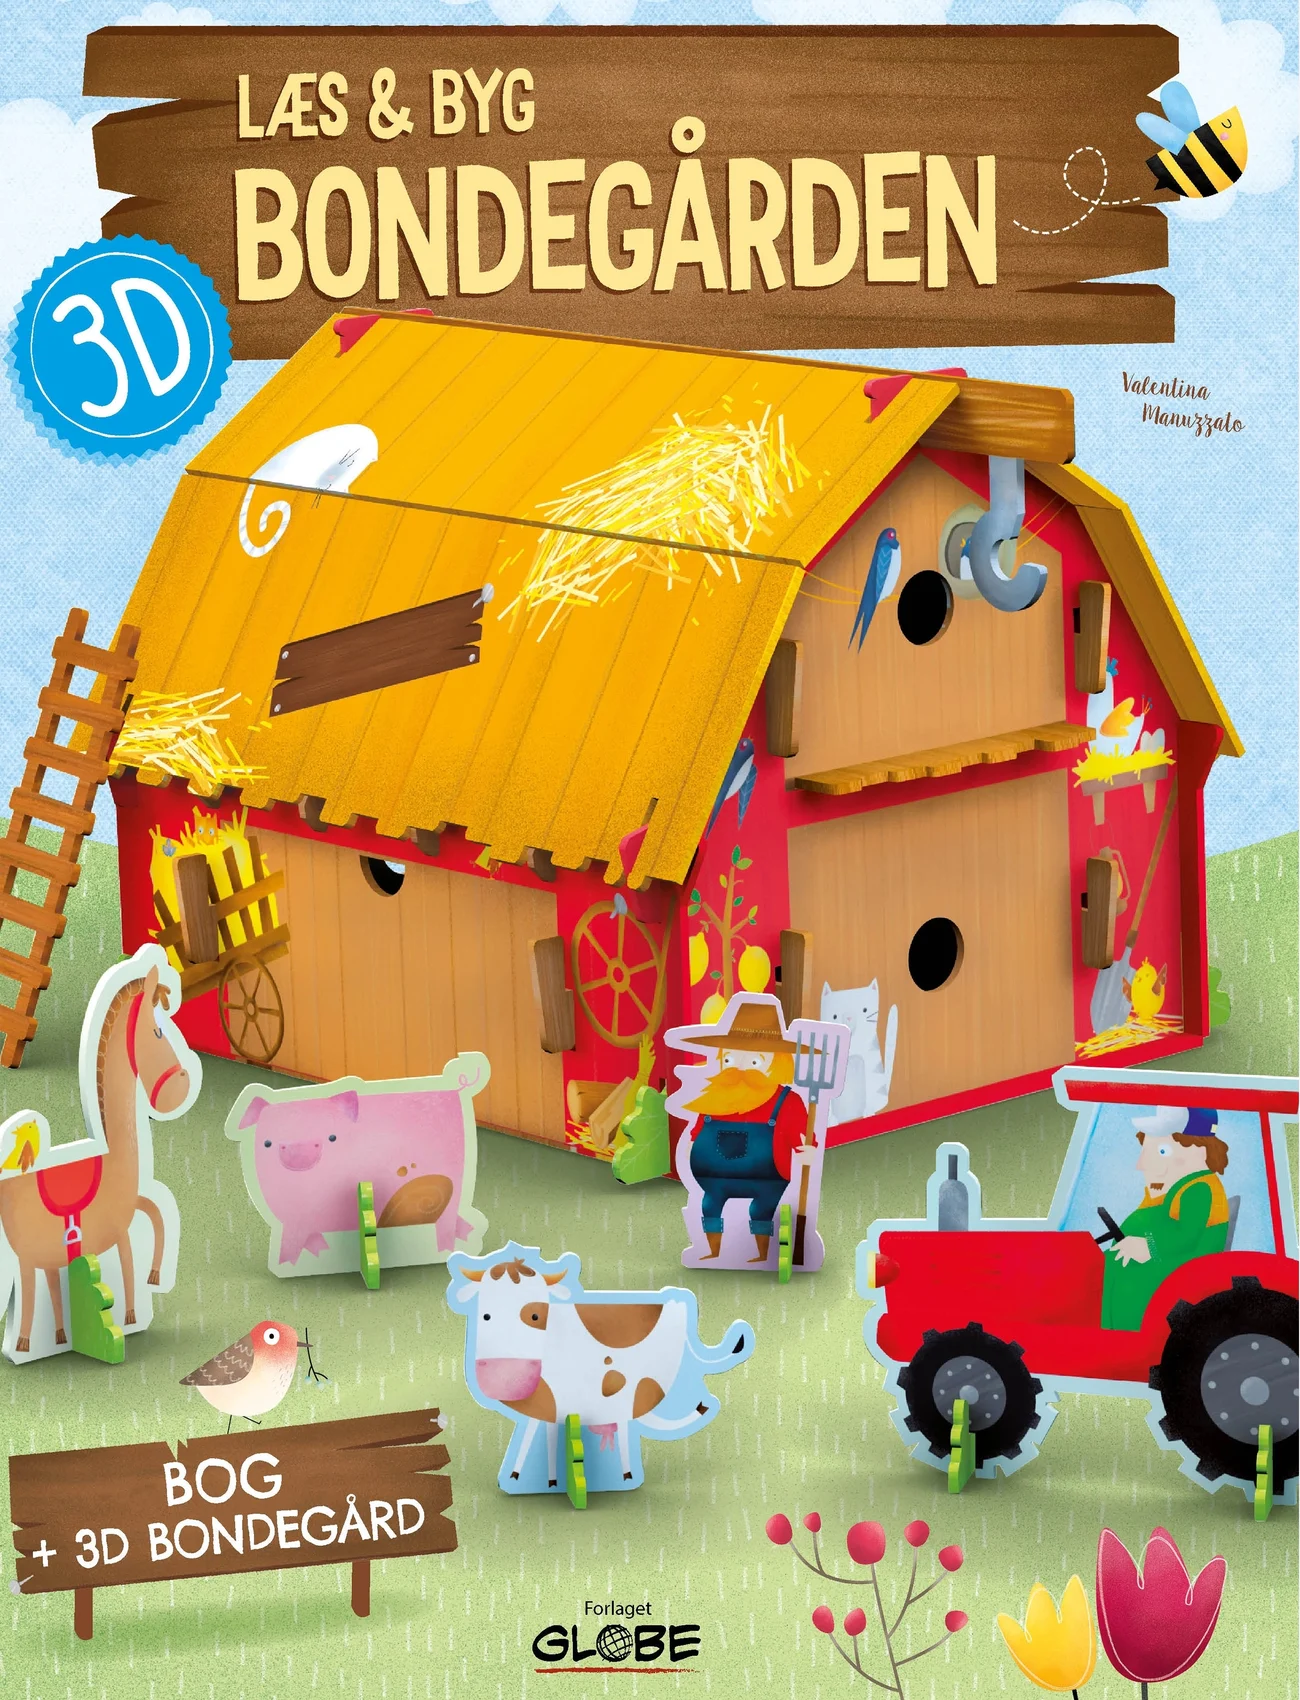 GLOBE - Læs & byg Bondegården - die niedrigsten preise - children's book - 0